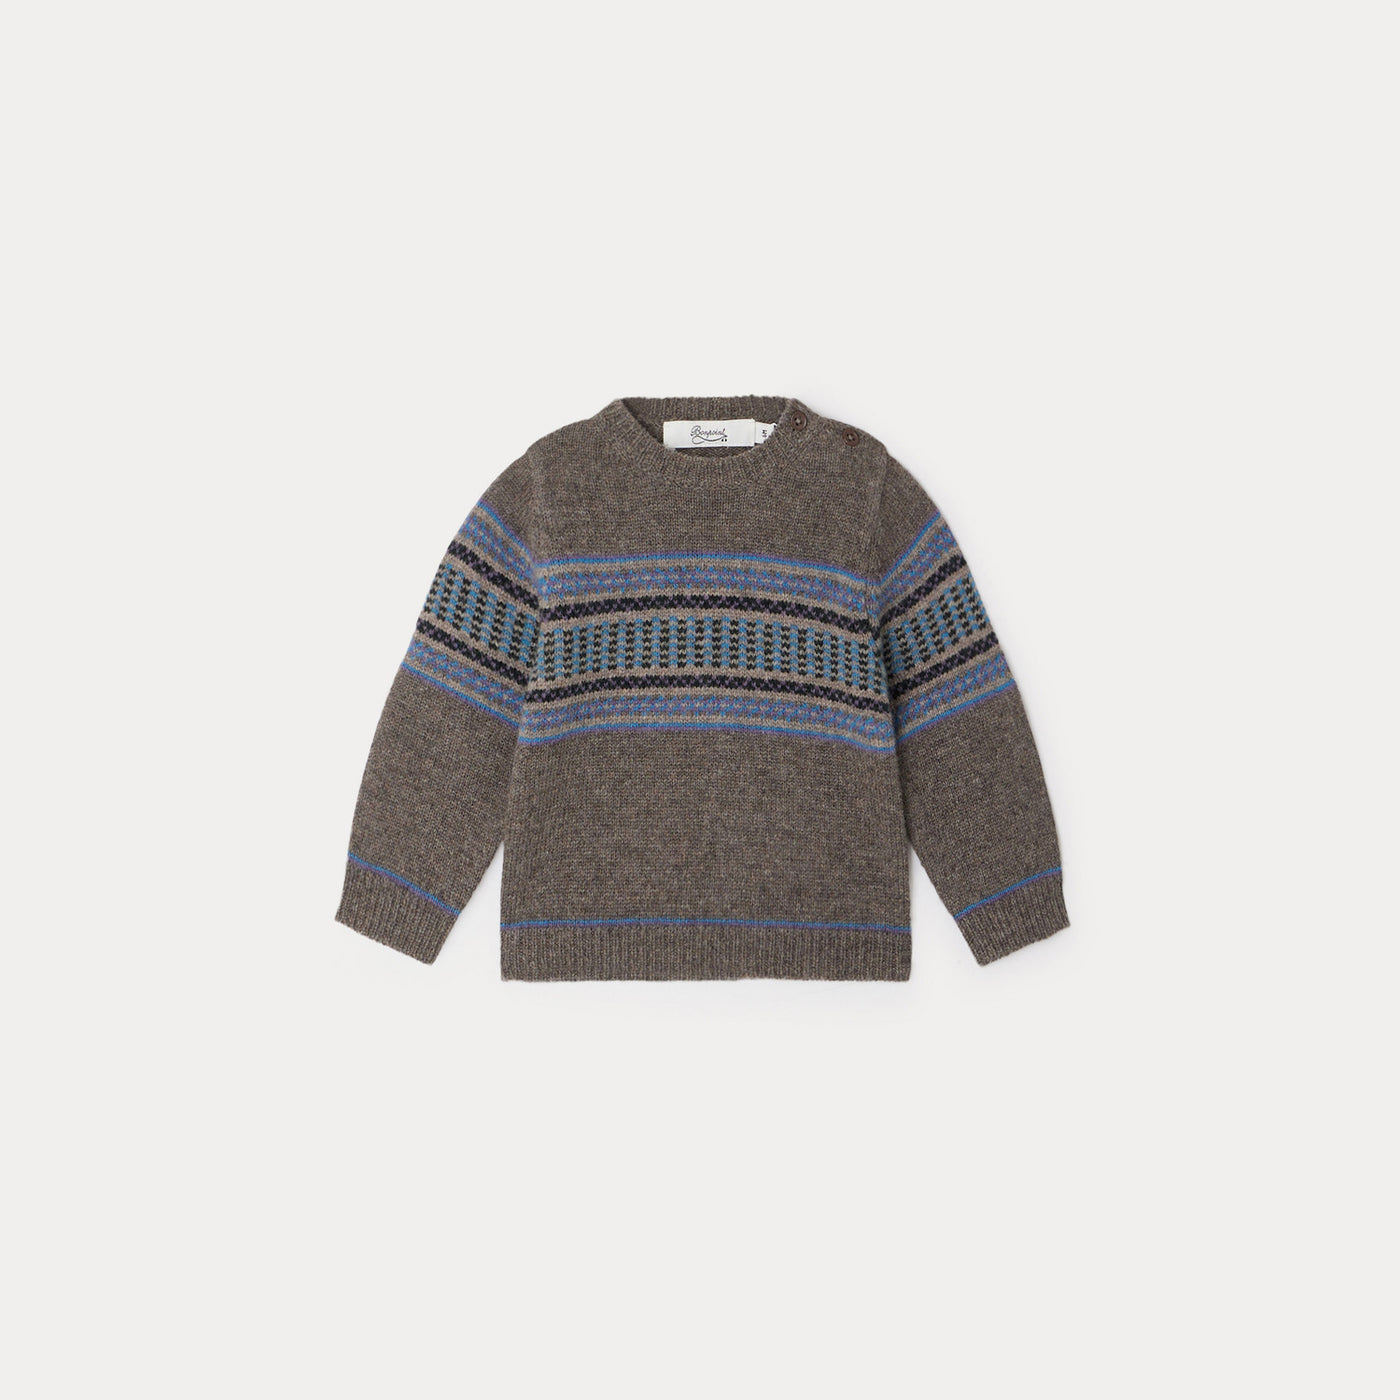 Bassiano Sweater brown